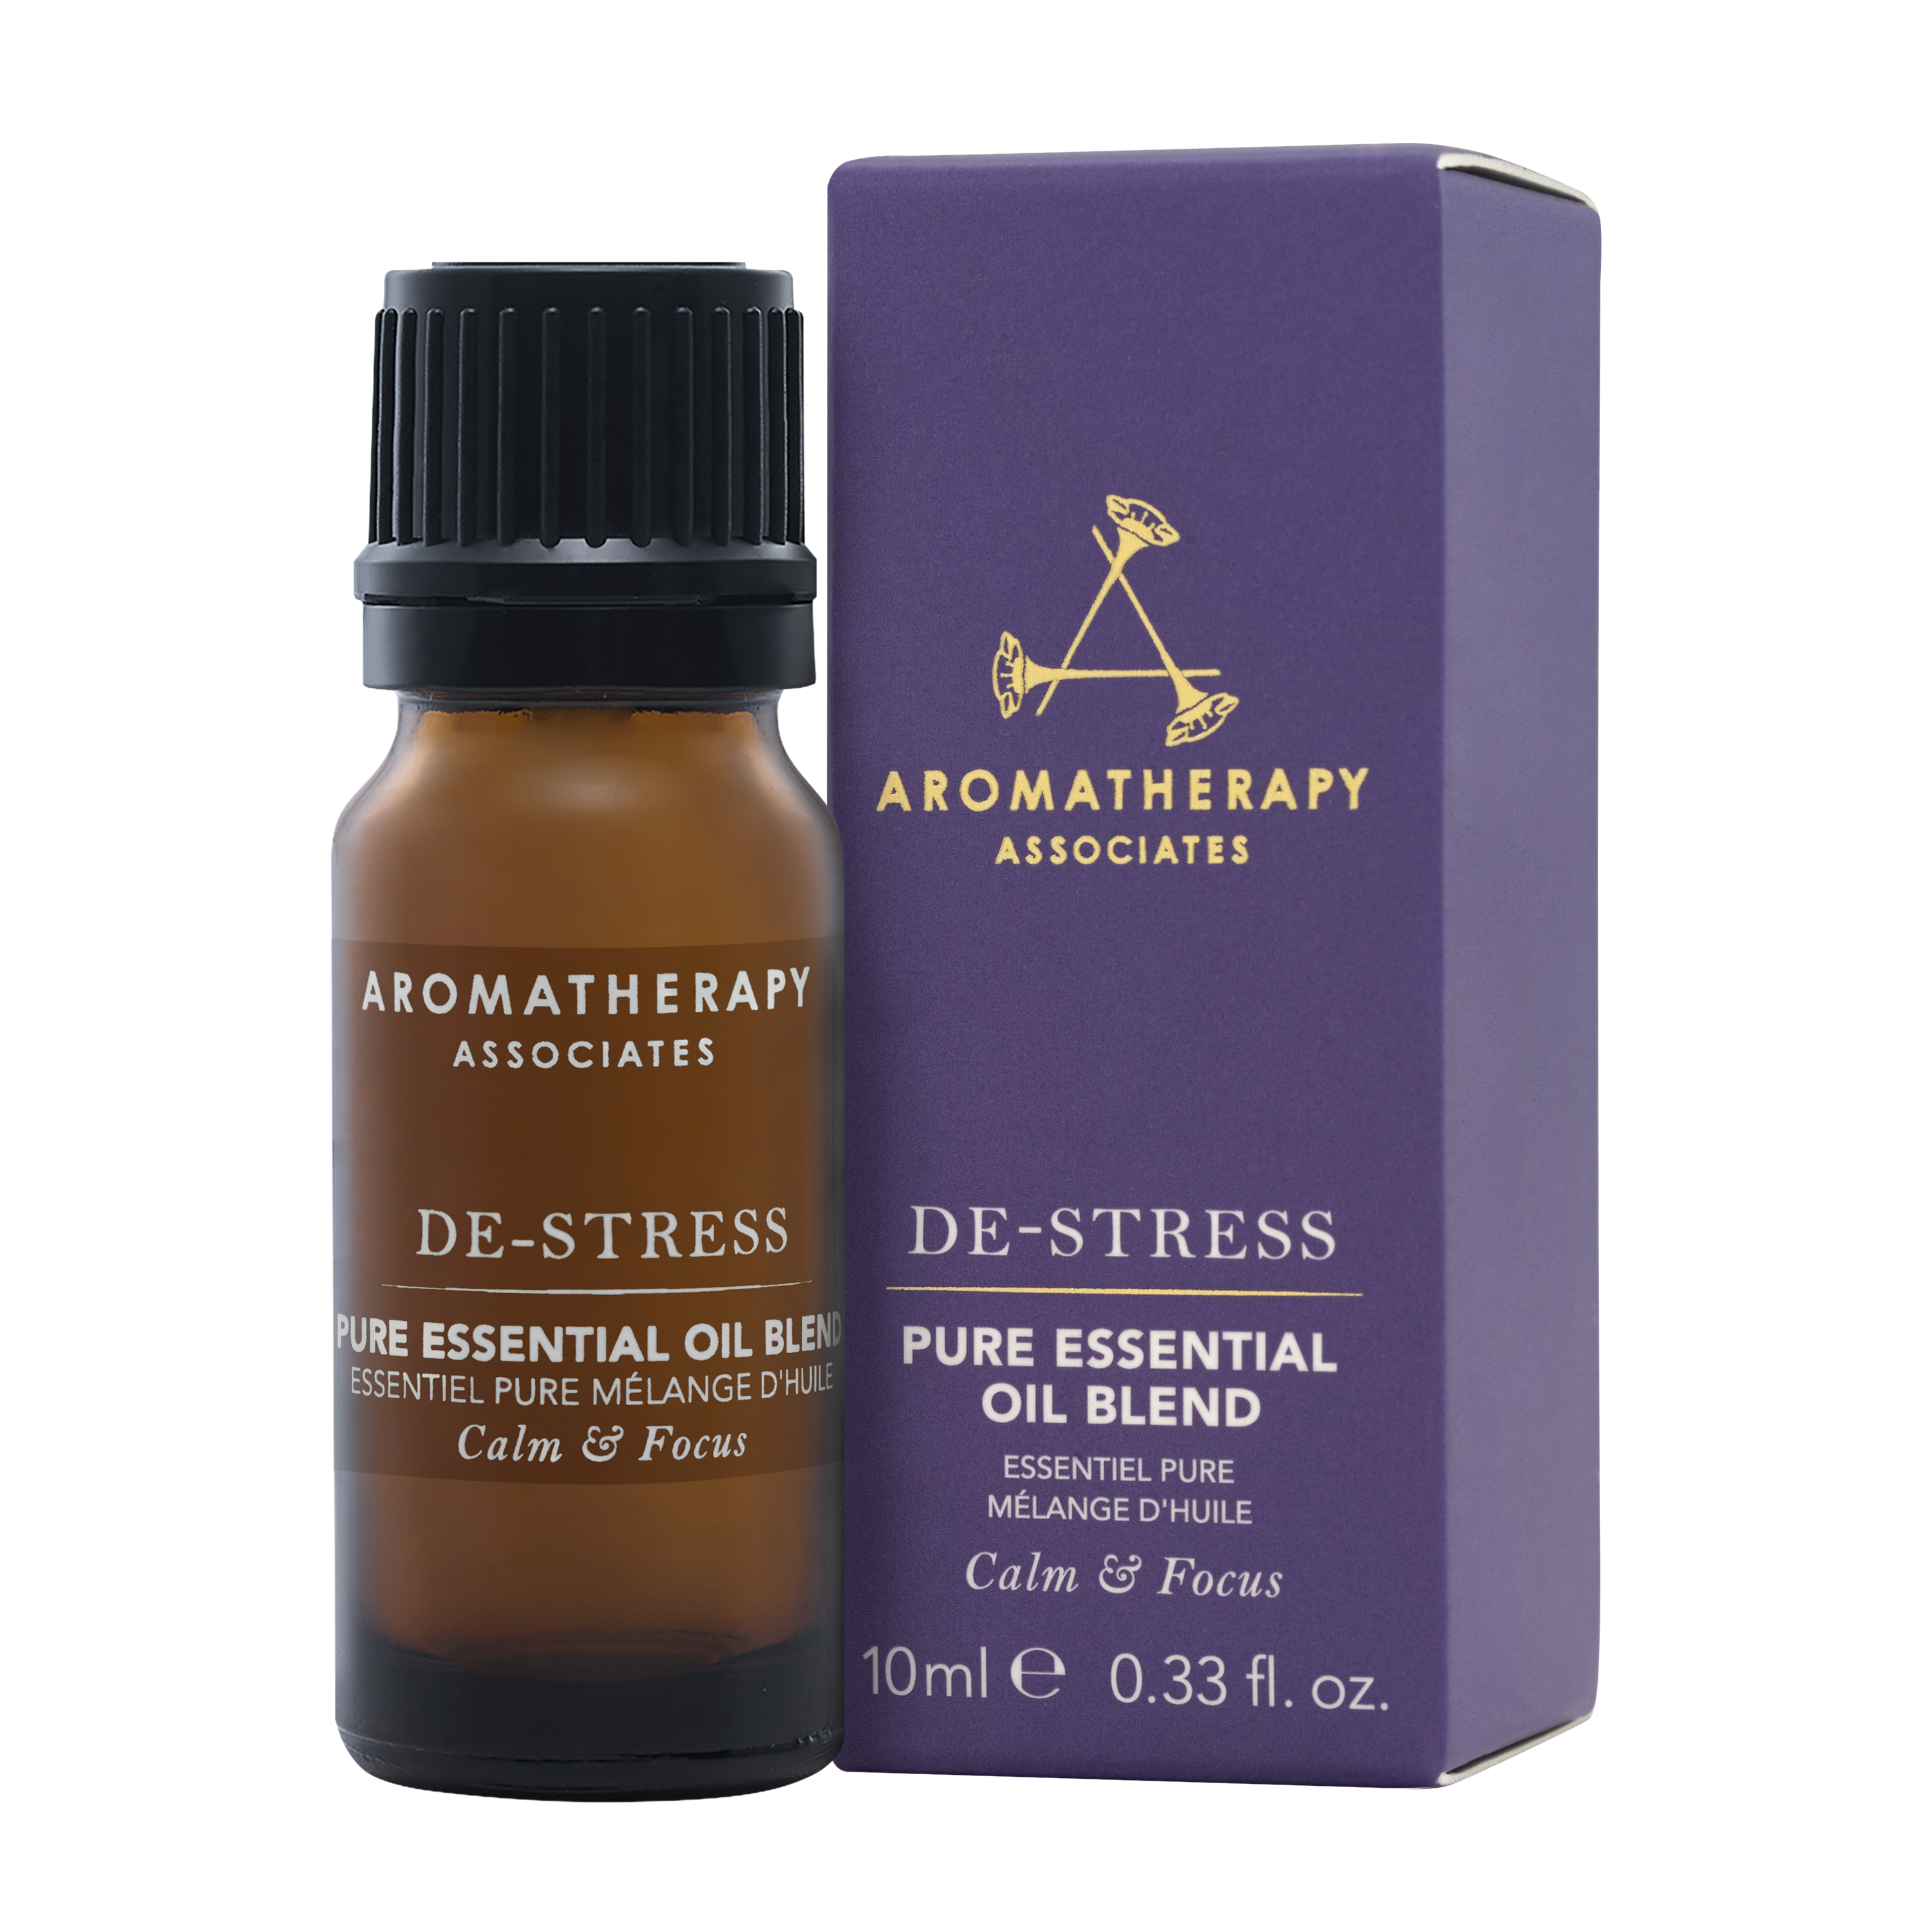 De-Stress Pure Essential Oil Blend Aromatherapy Associates